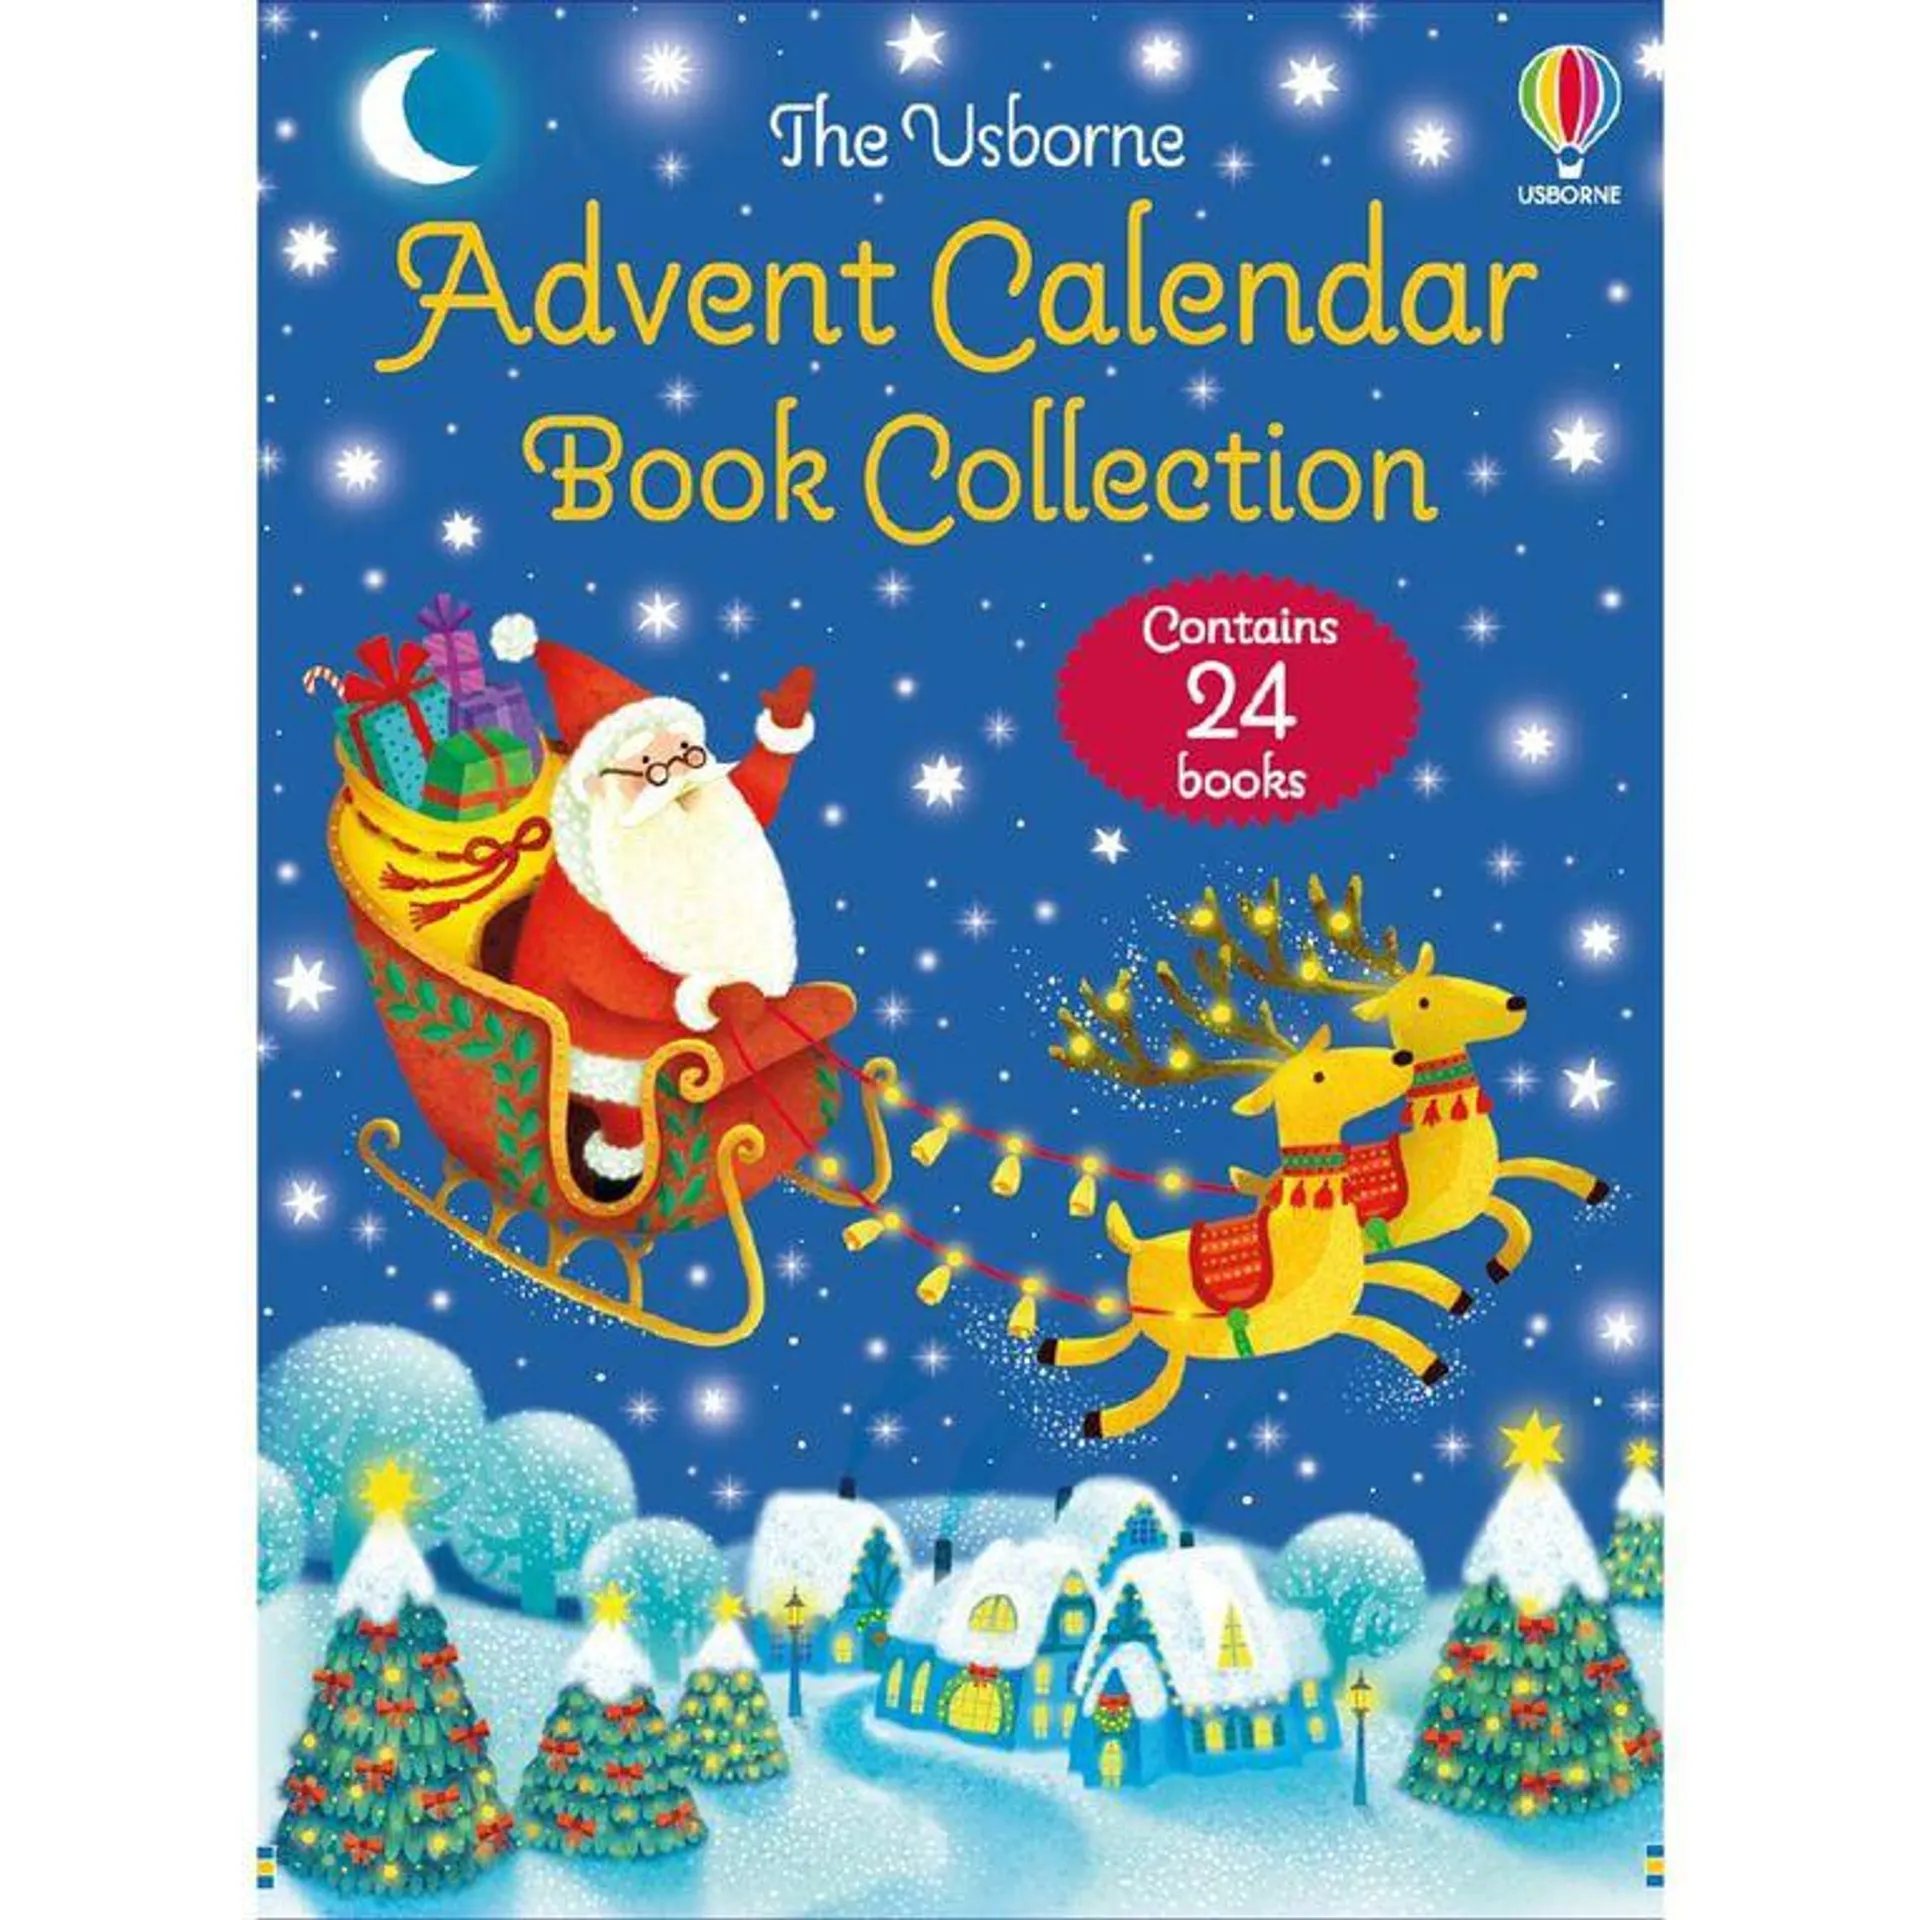 The Usborne Advent Calendar Collection #2